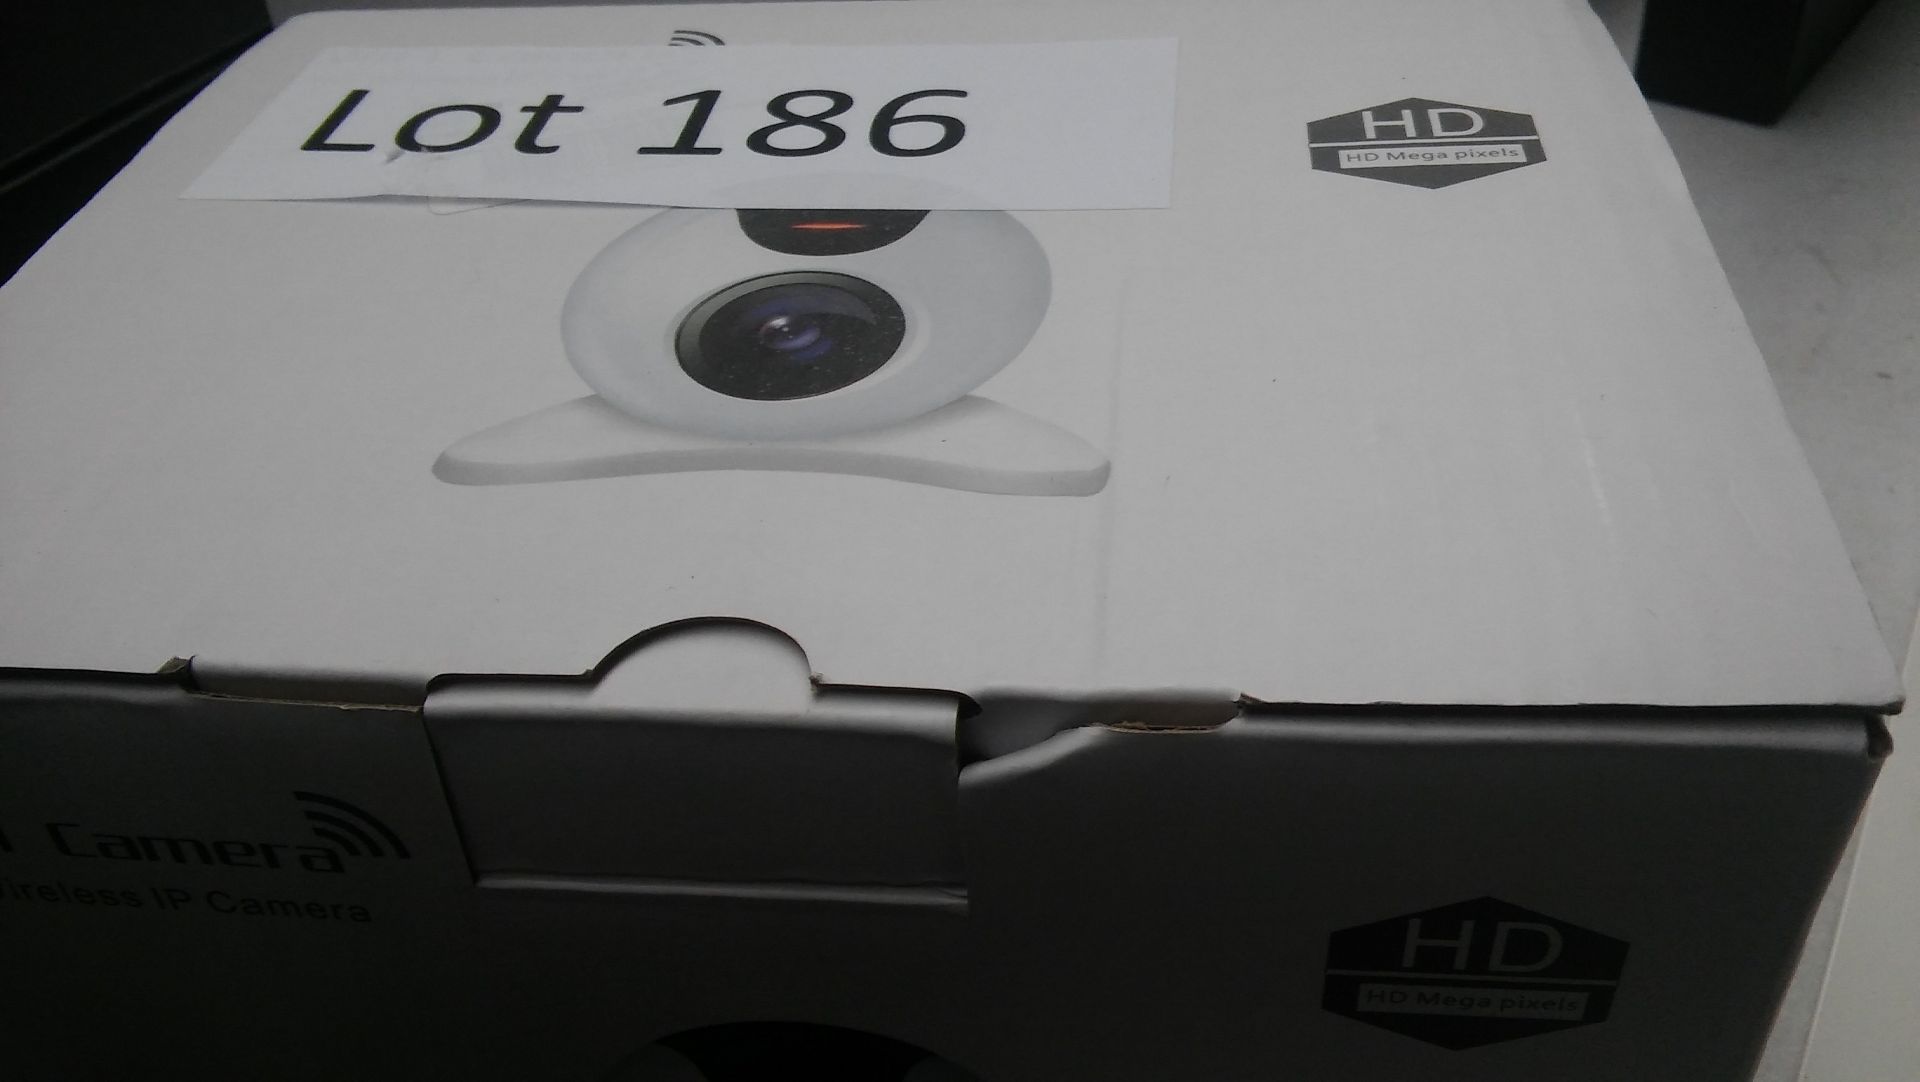 Wifi camera. HD wireless IP camera.As new. RRP -£130.